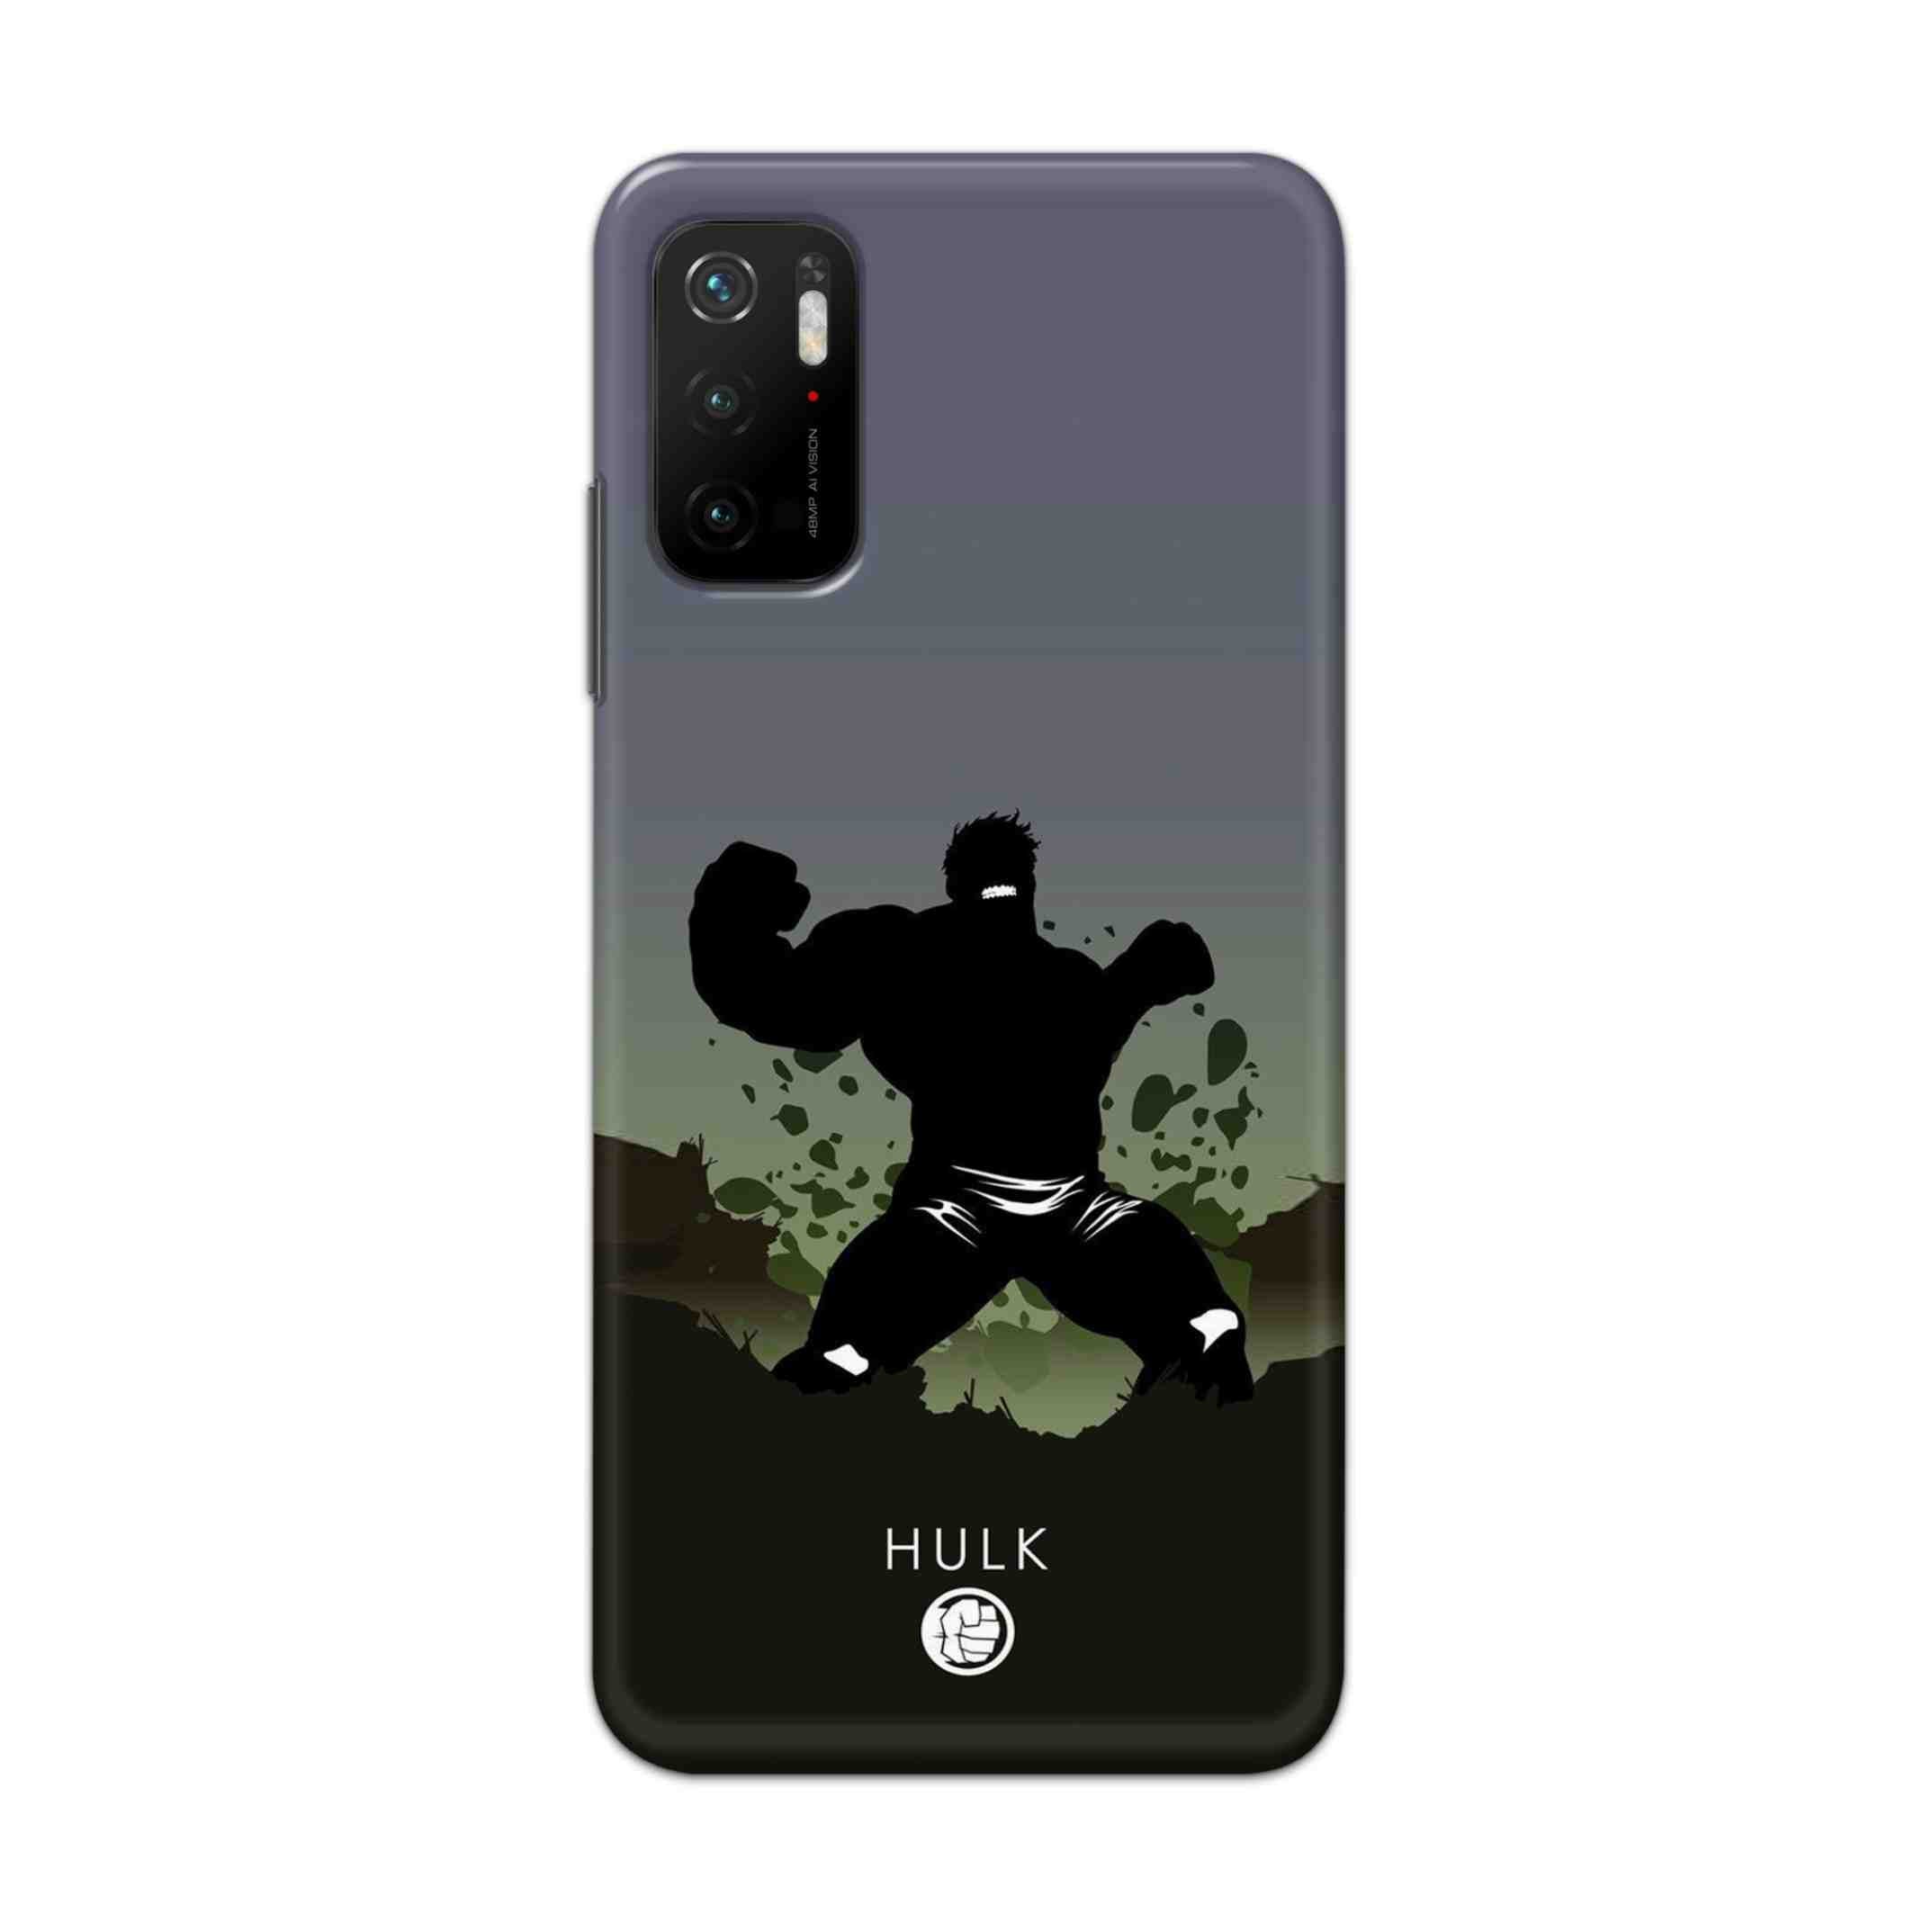 Buy Hulk Drax Hard Back Mobile Phone Case Cover For Poco M3 Pro 5G Online